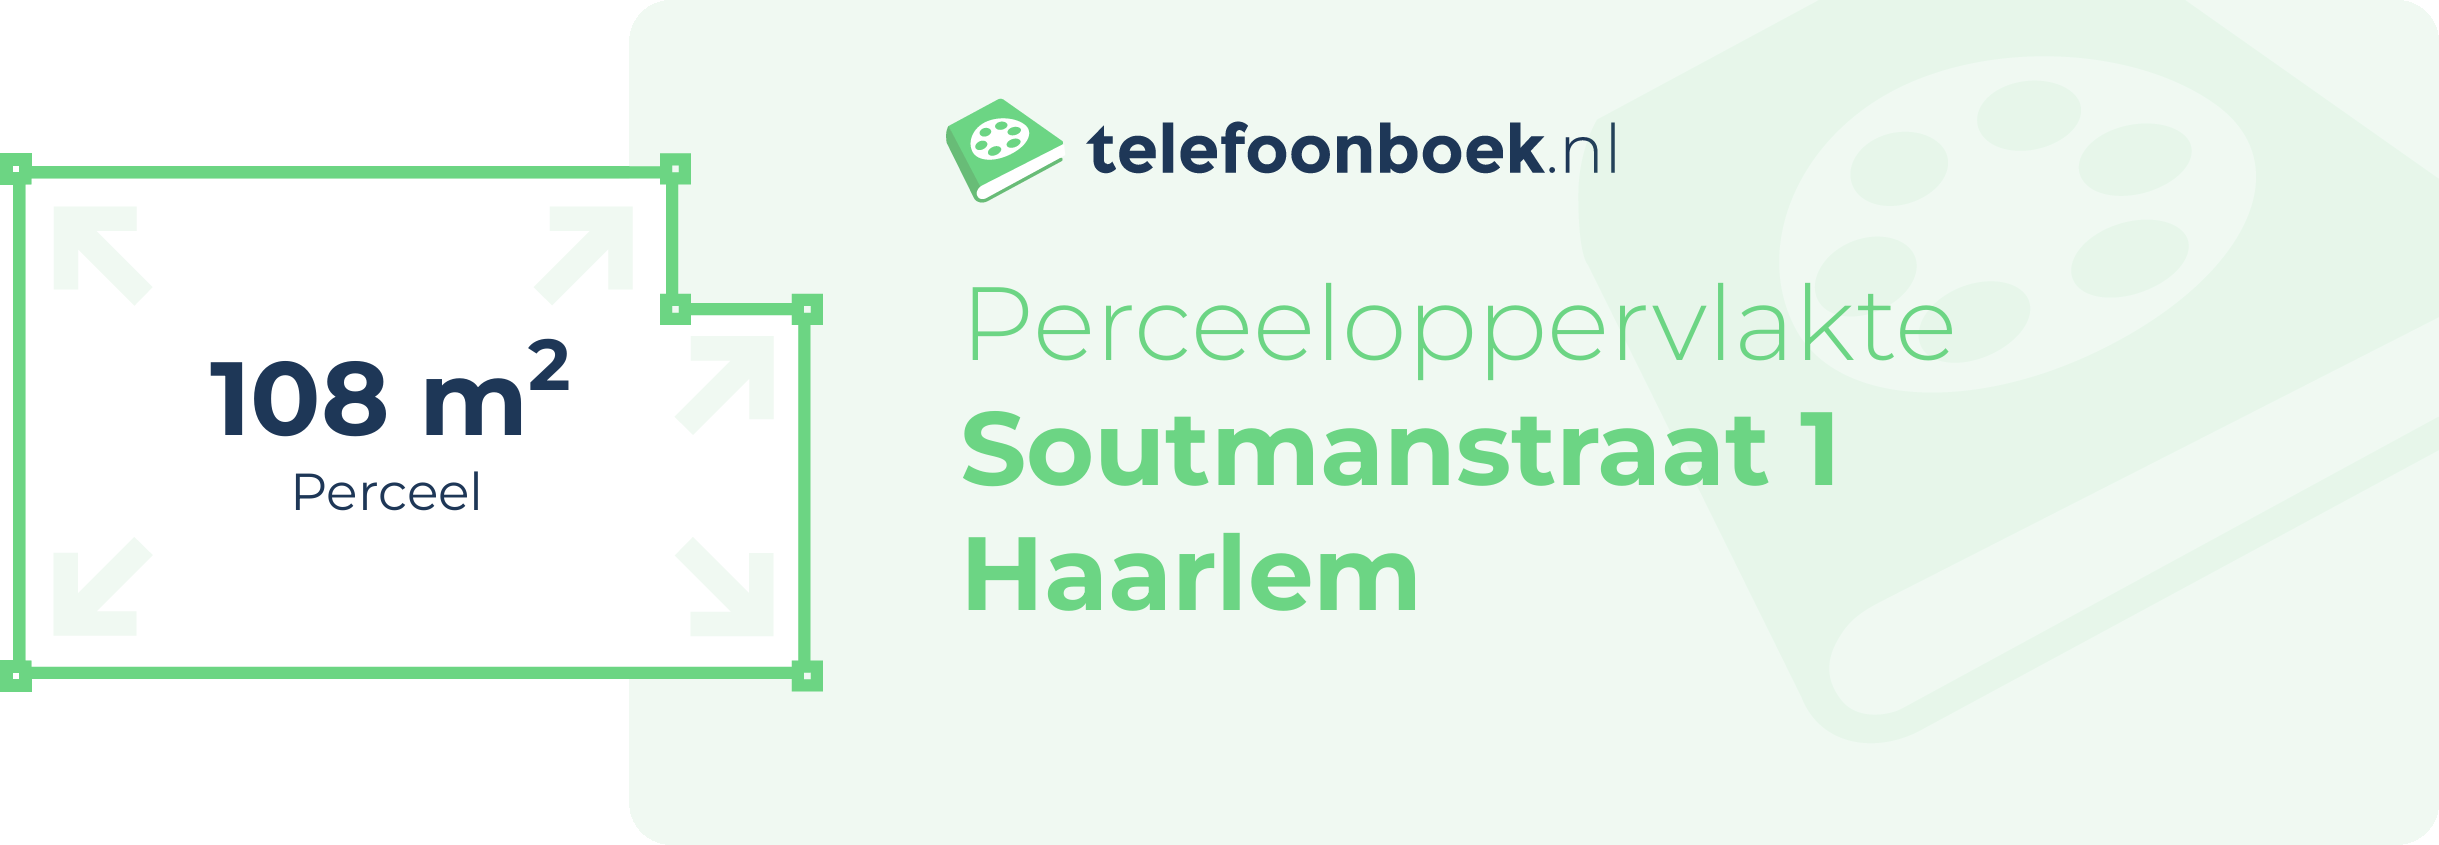 Perceeloppervlakte Soutmanstraat 1 Haarlem